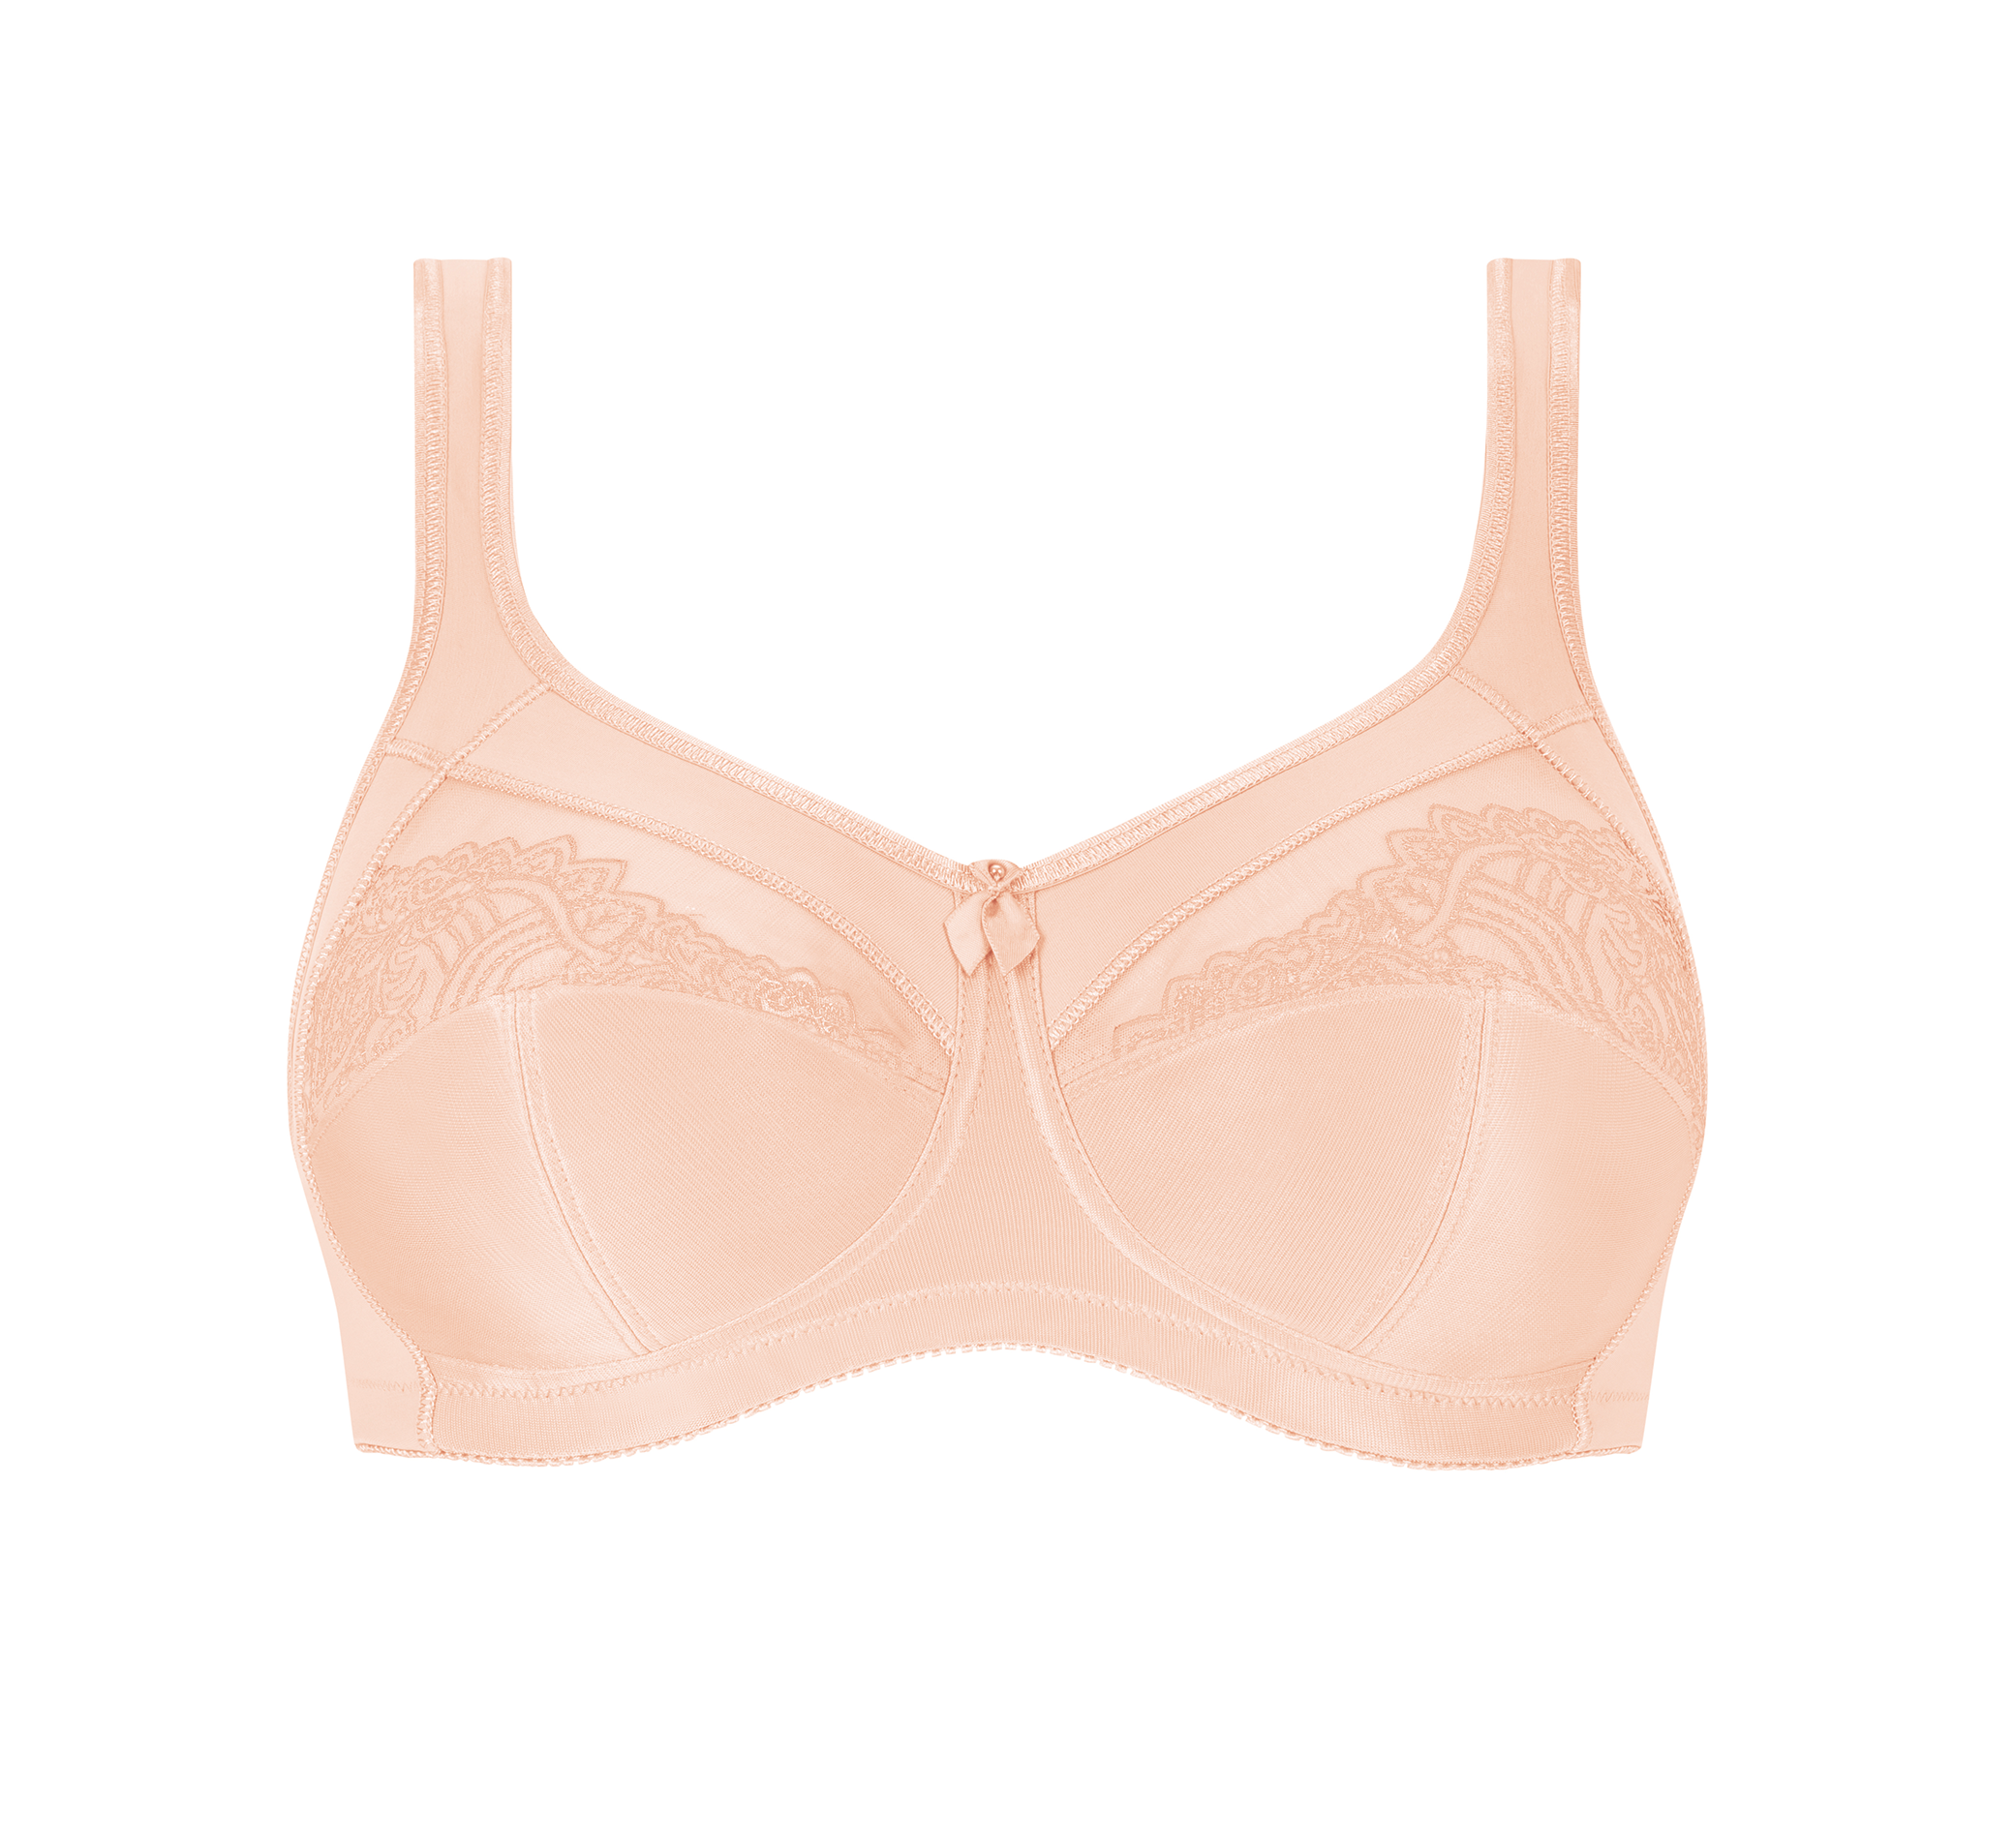 Amoena Marlena Wire-Free bra Soft Cup, Size 42D, Blush Ref